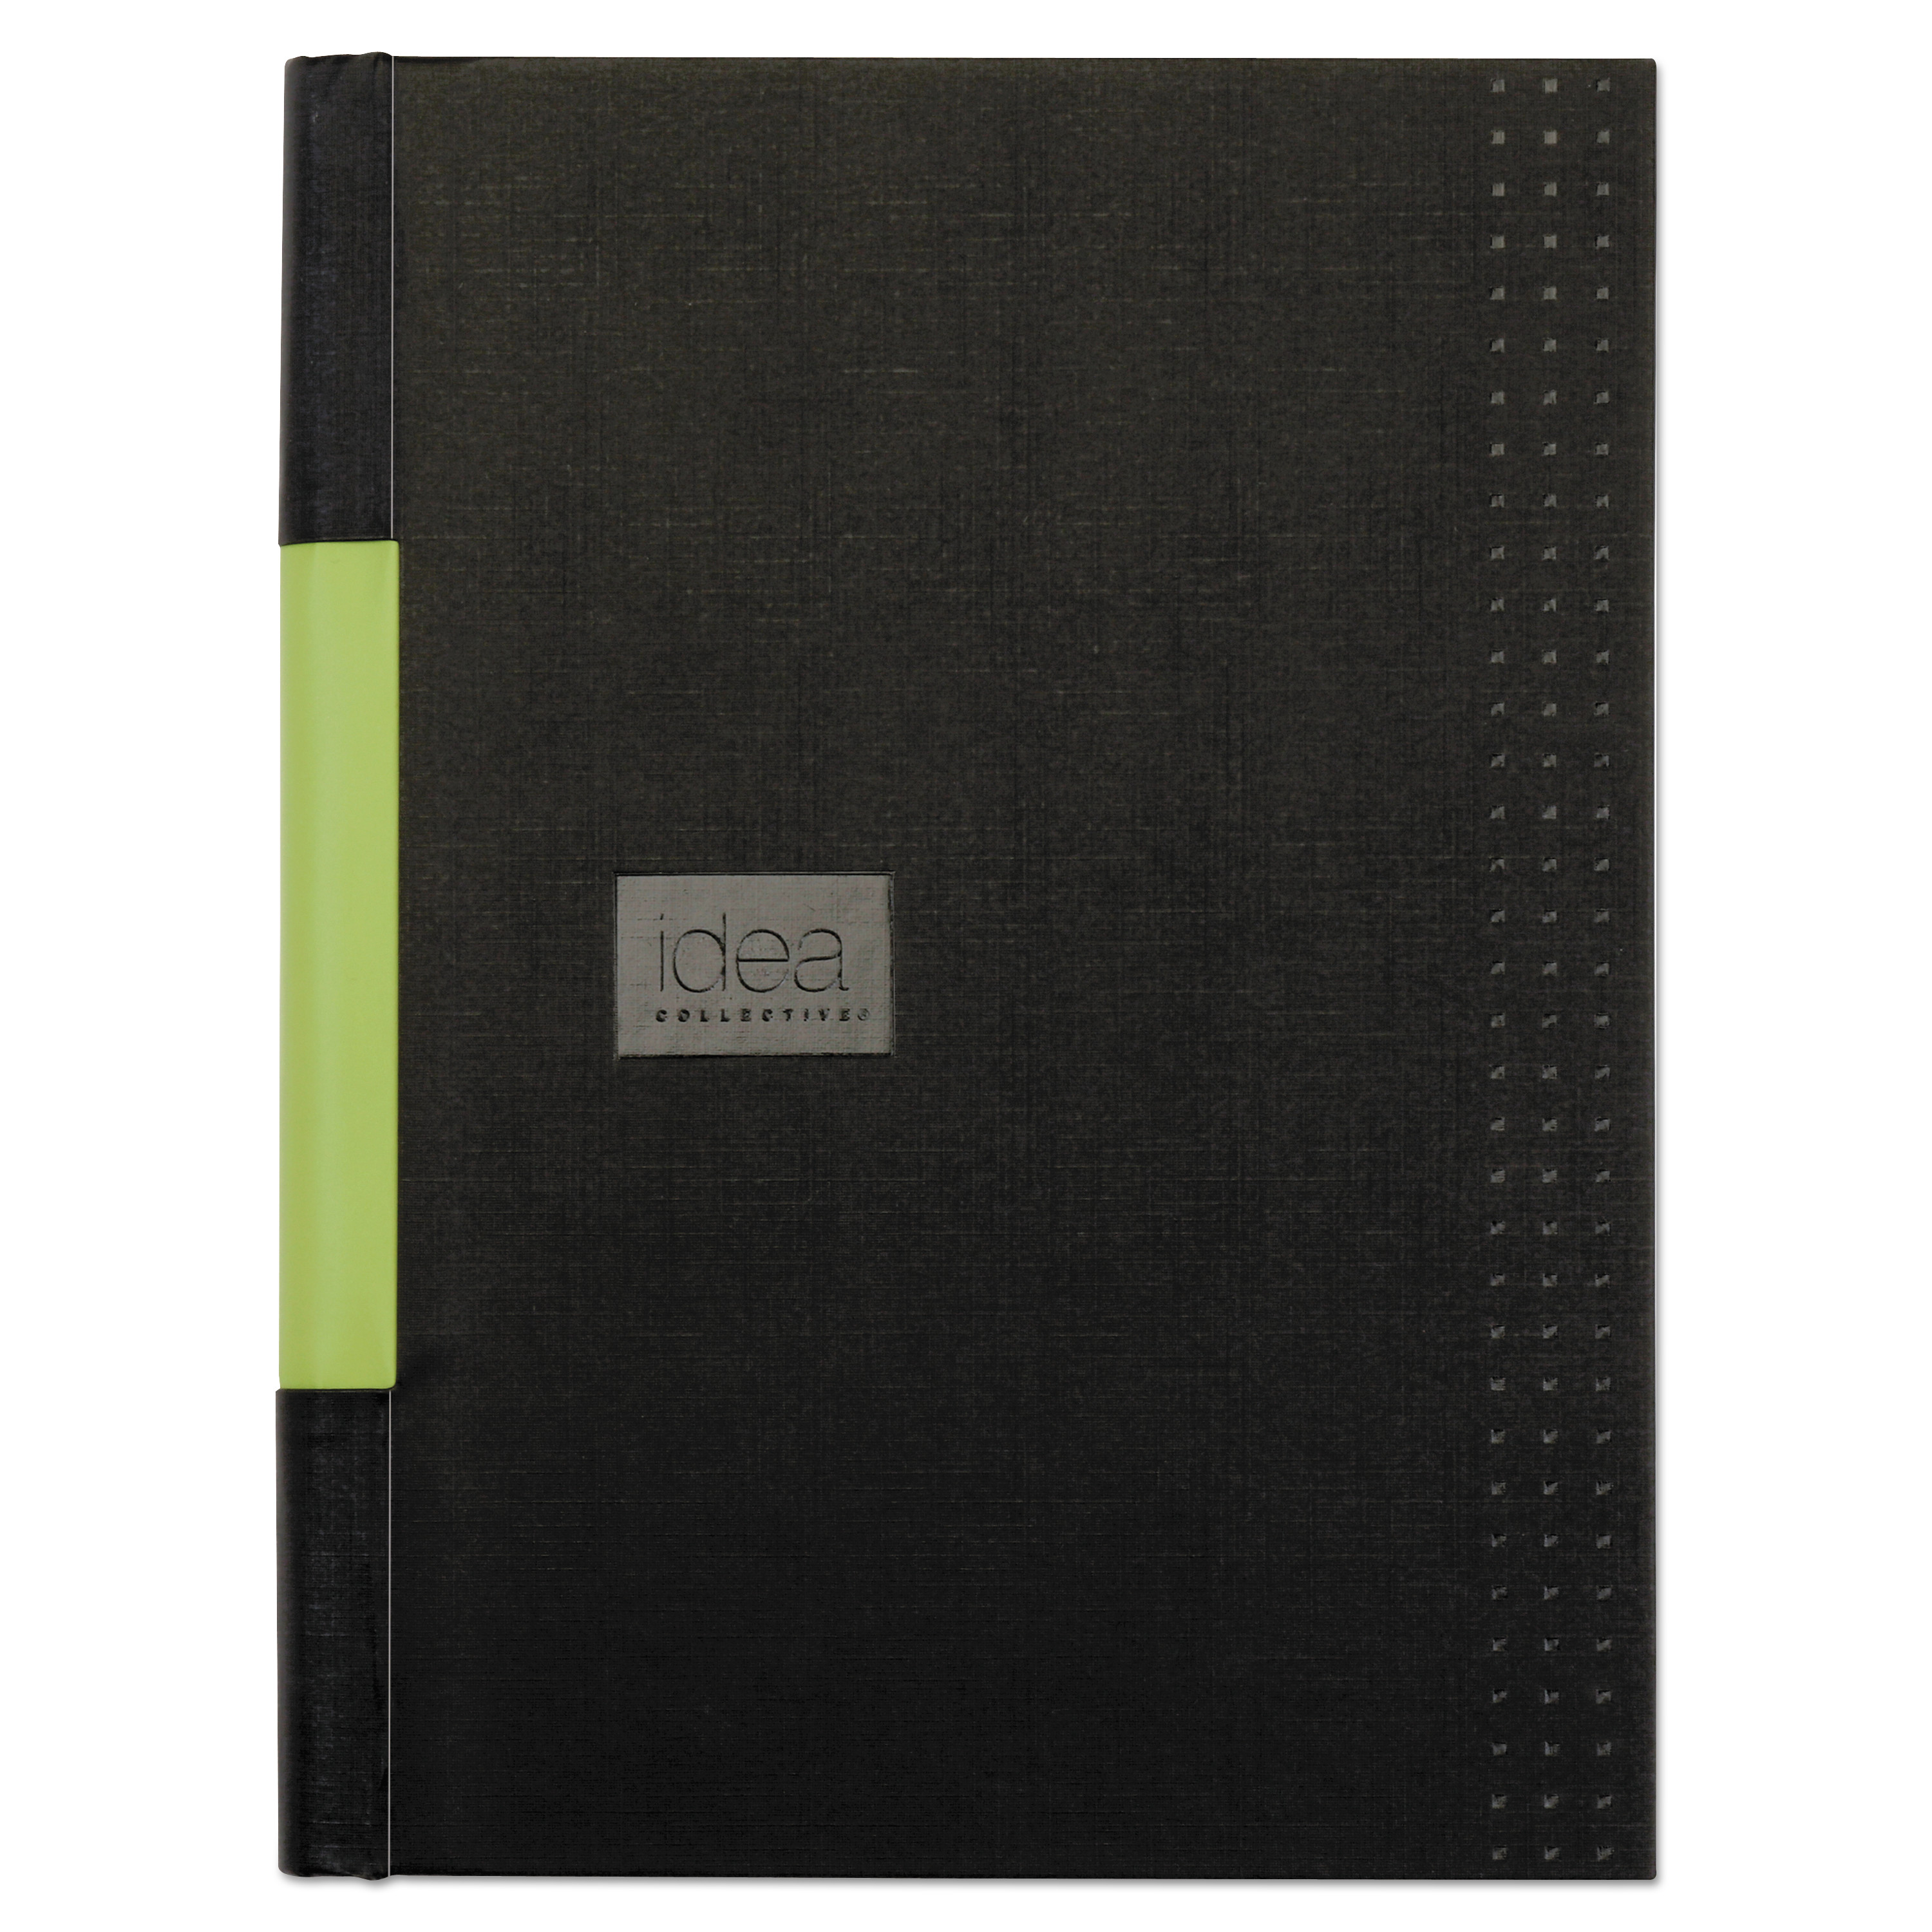  Oxford 56891 Idea Collective Professional Casebound Hardcover Notebook, 8 1/4 x 11 3/4, Black (TOP56891) 